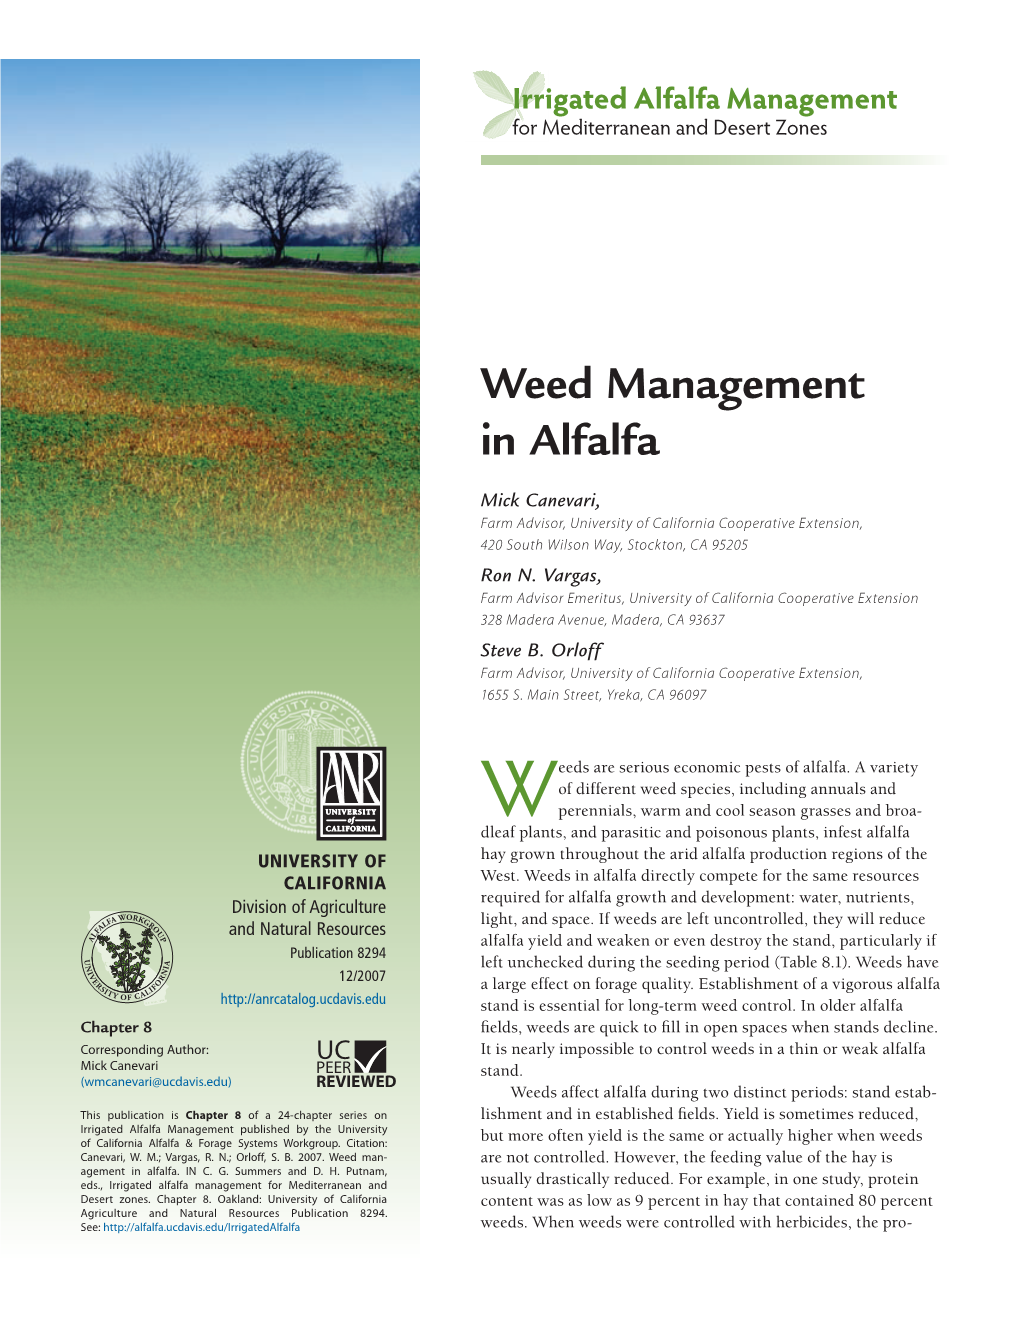 Weed Management in Alfalfa